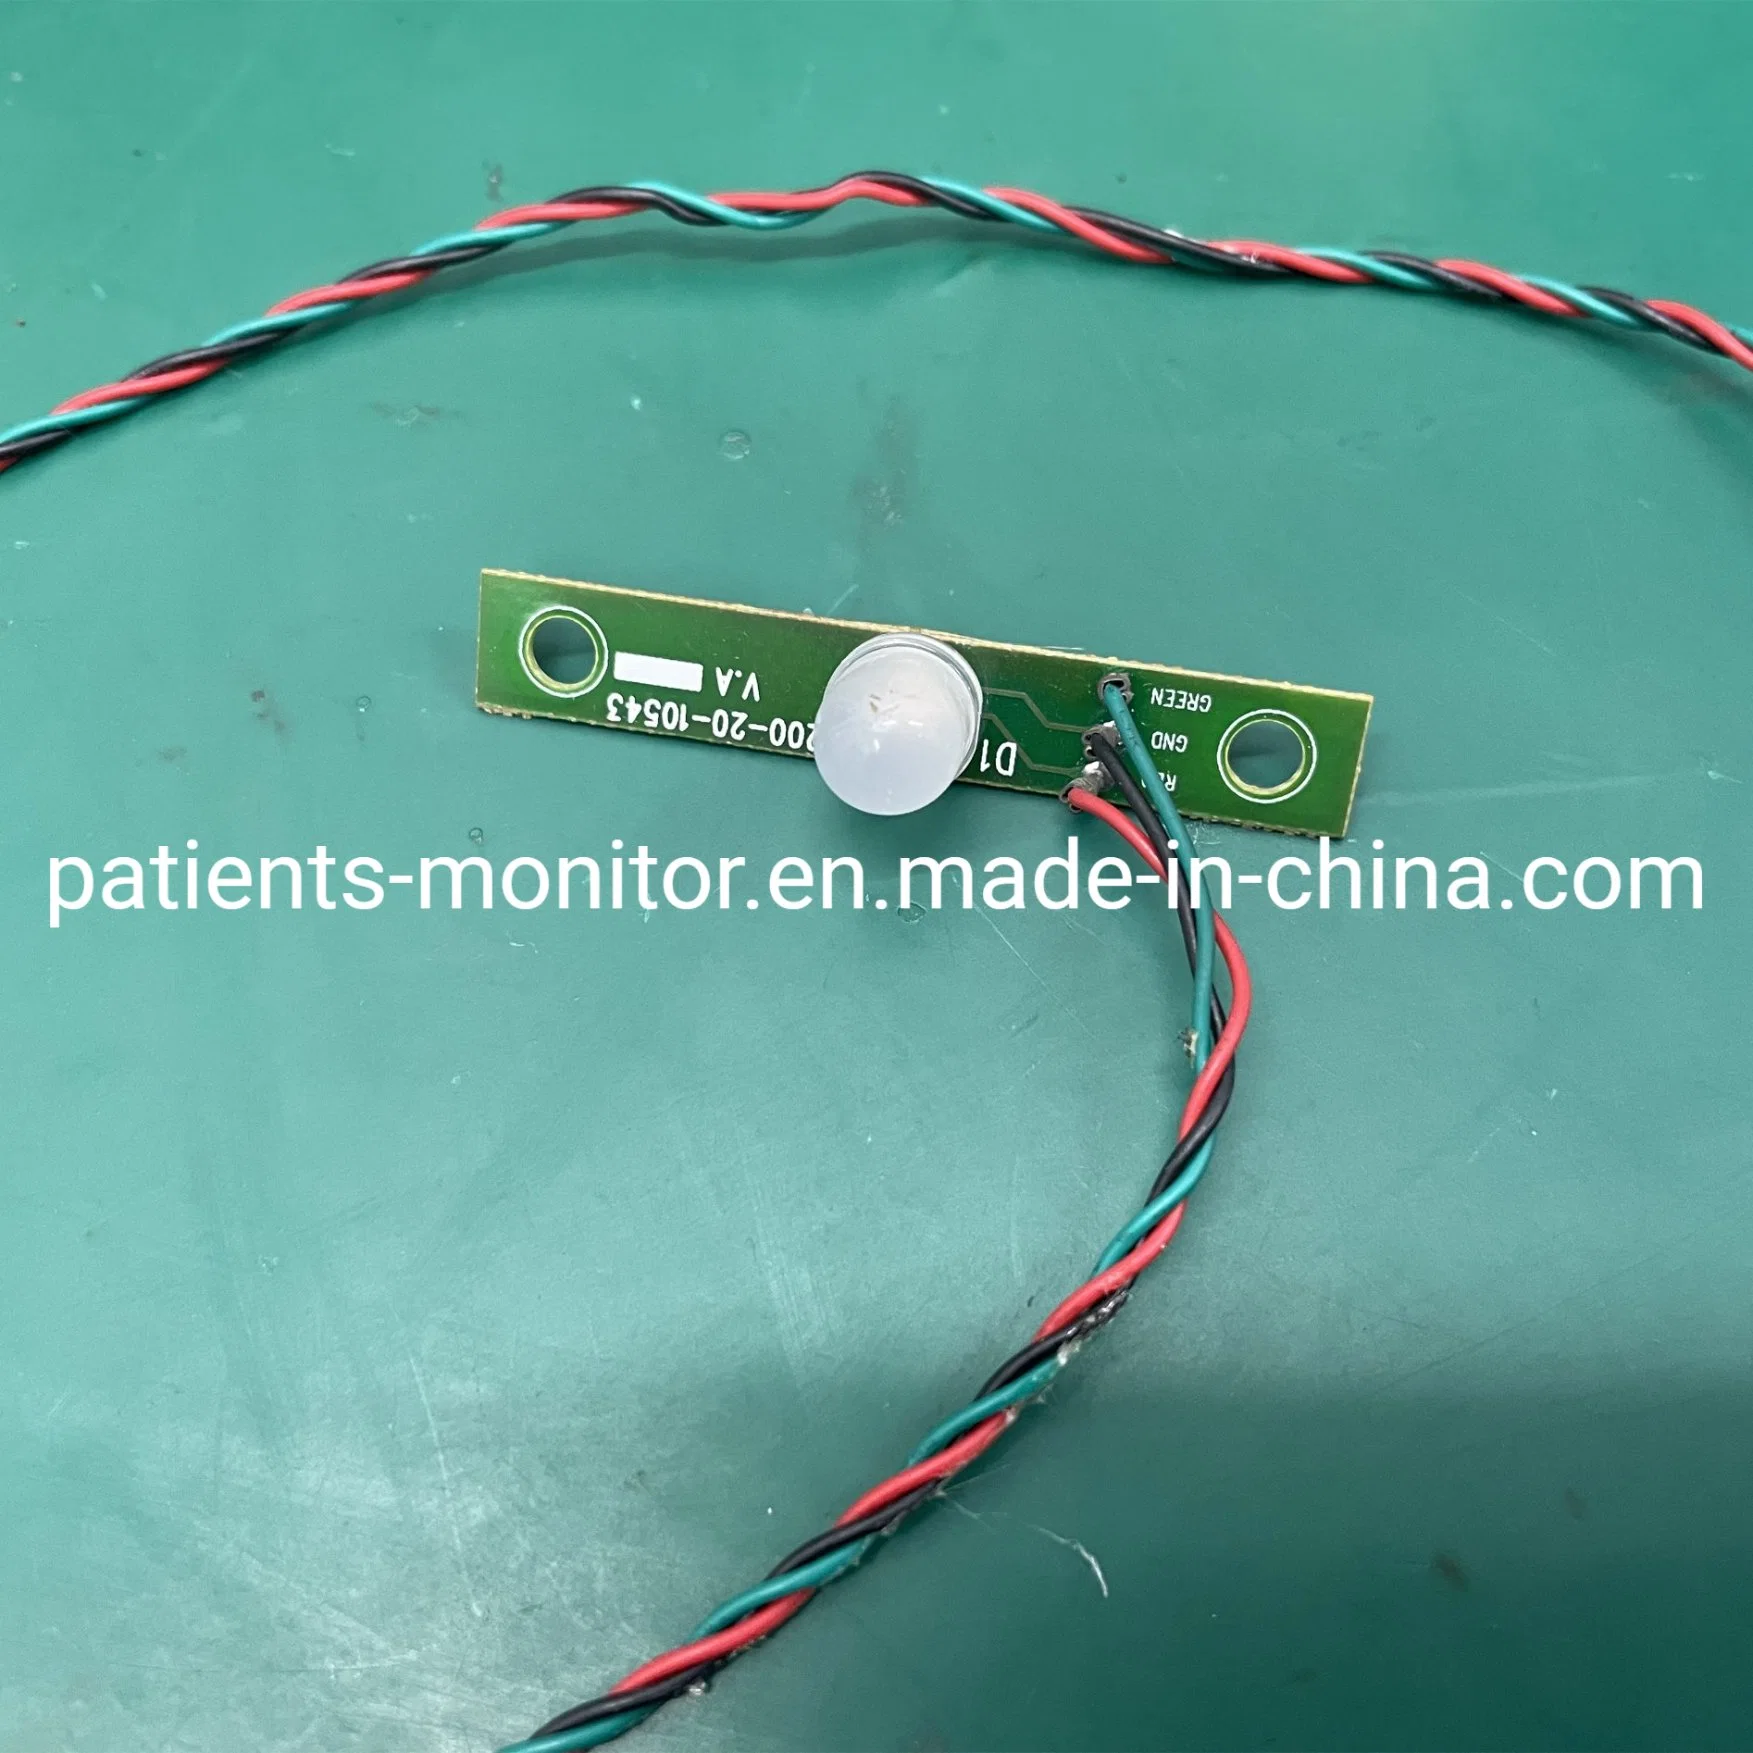 Mindray Pm-7000 Patient Monitor Alarm Indicator LED Light Board 9200-20-10543